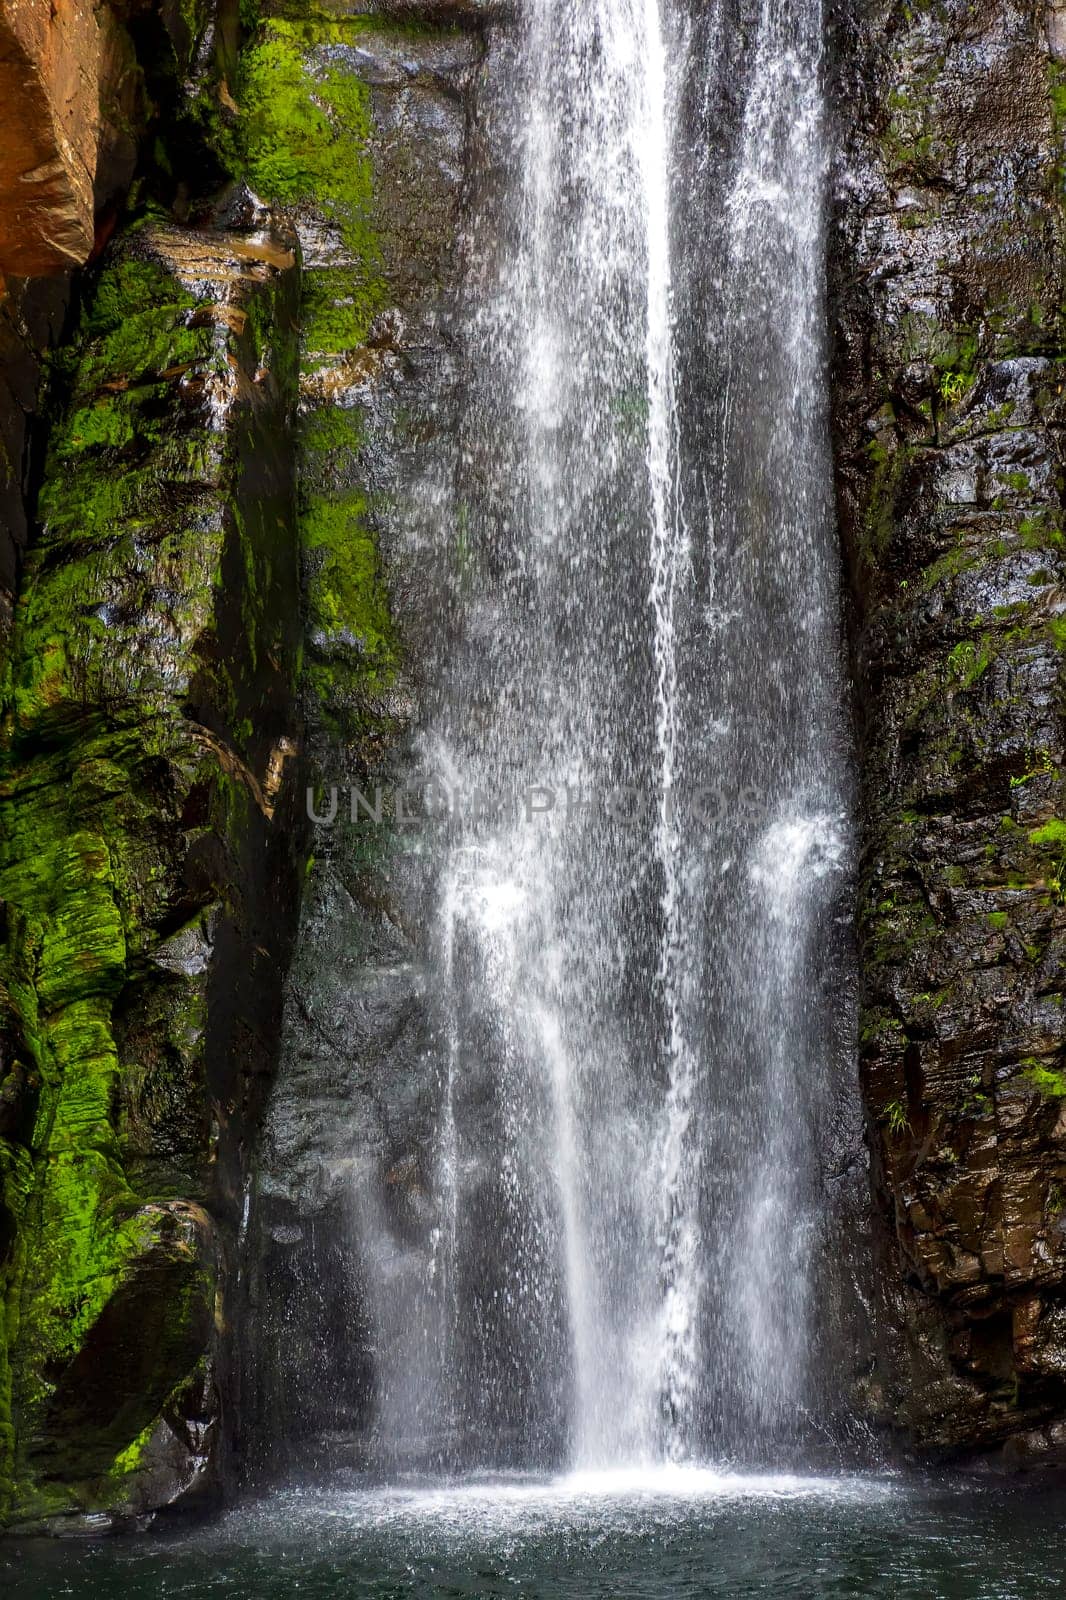 Paradisiacal waterfall of Veu da Noiva by Fred_Pinheiro